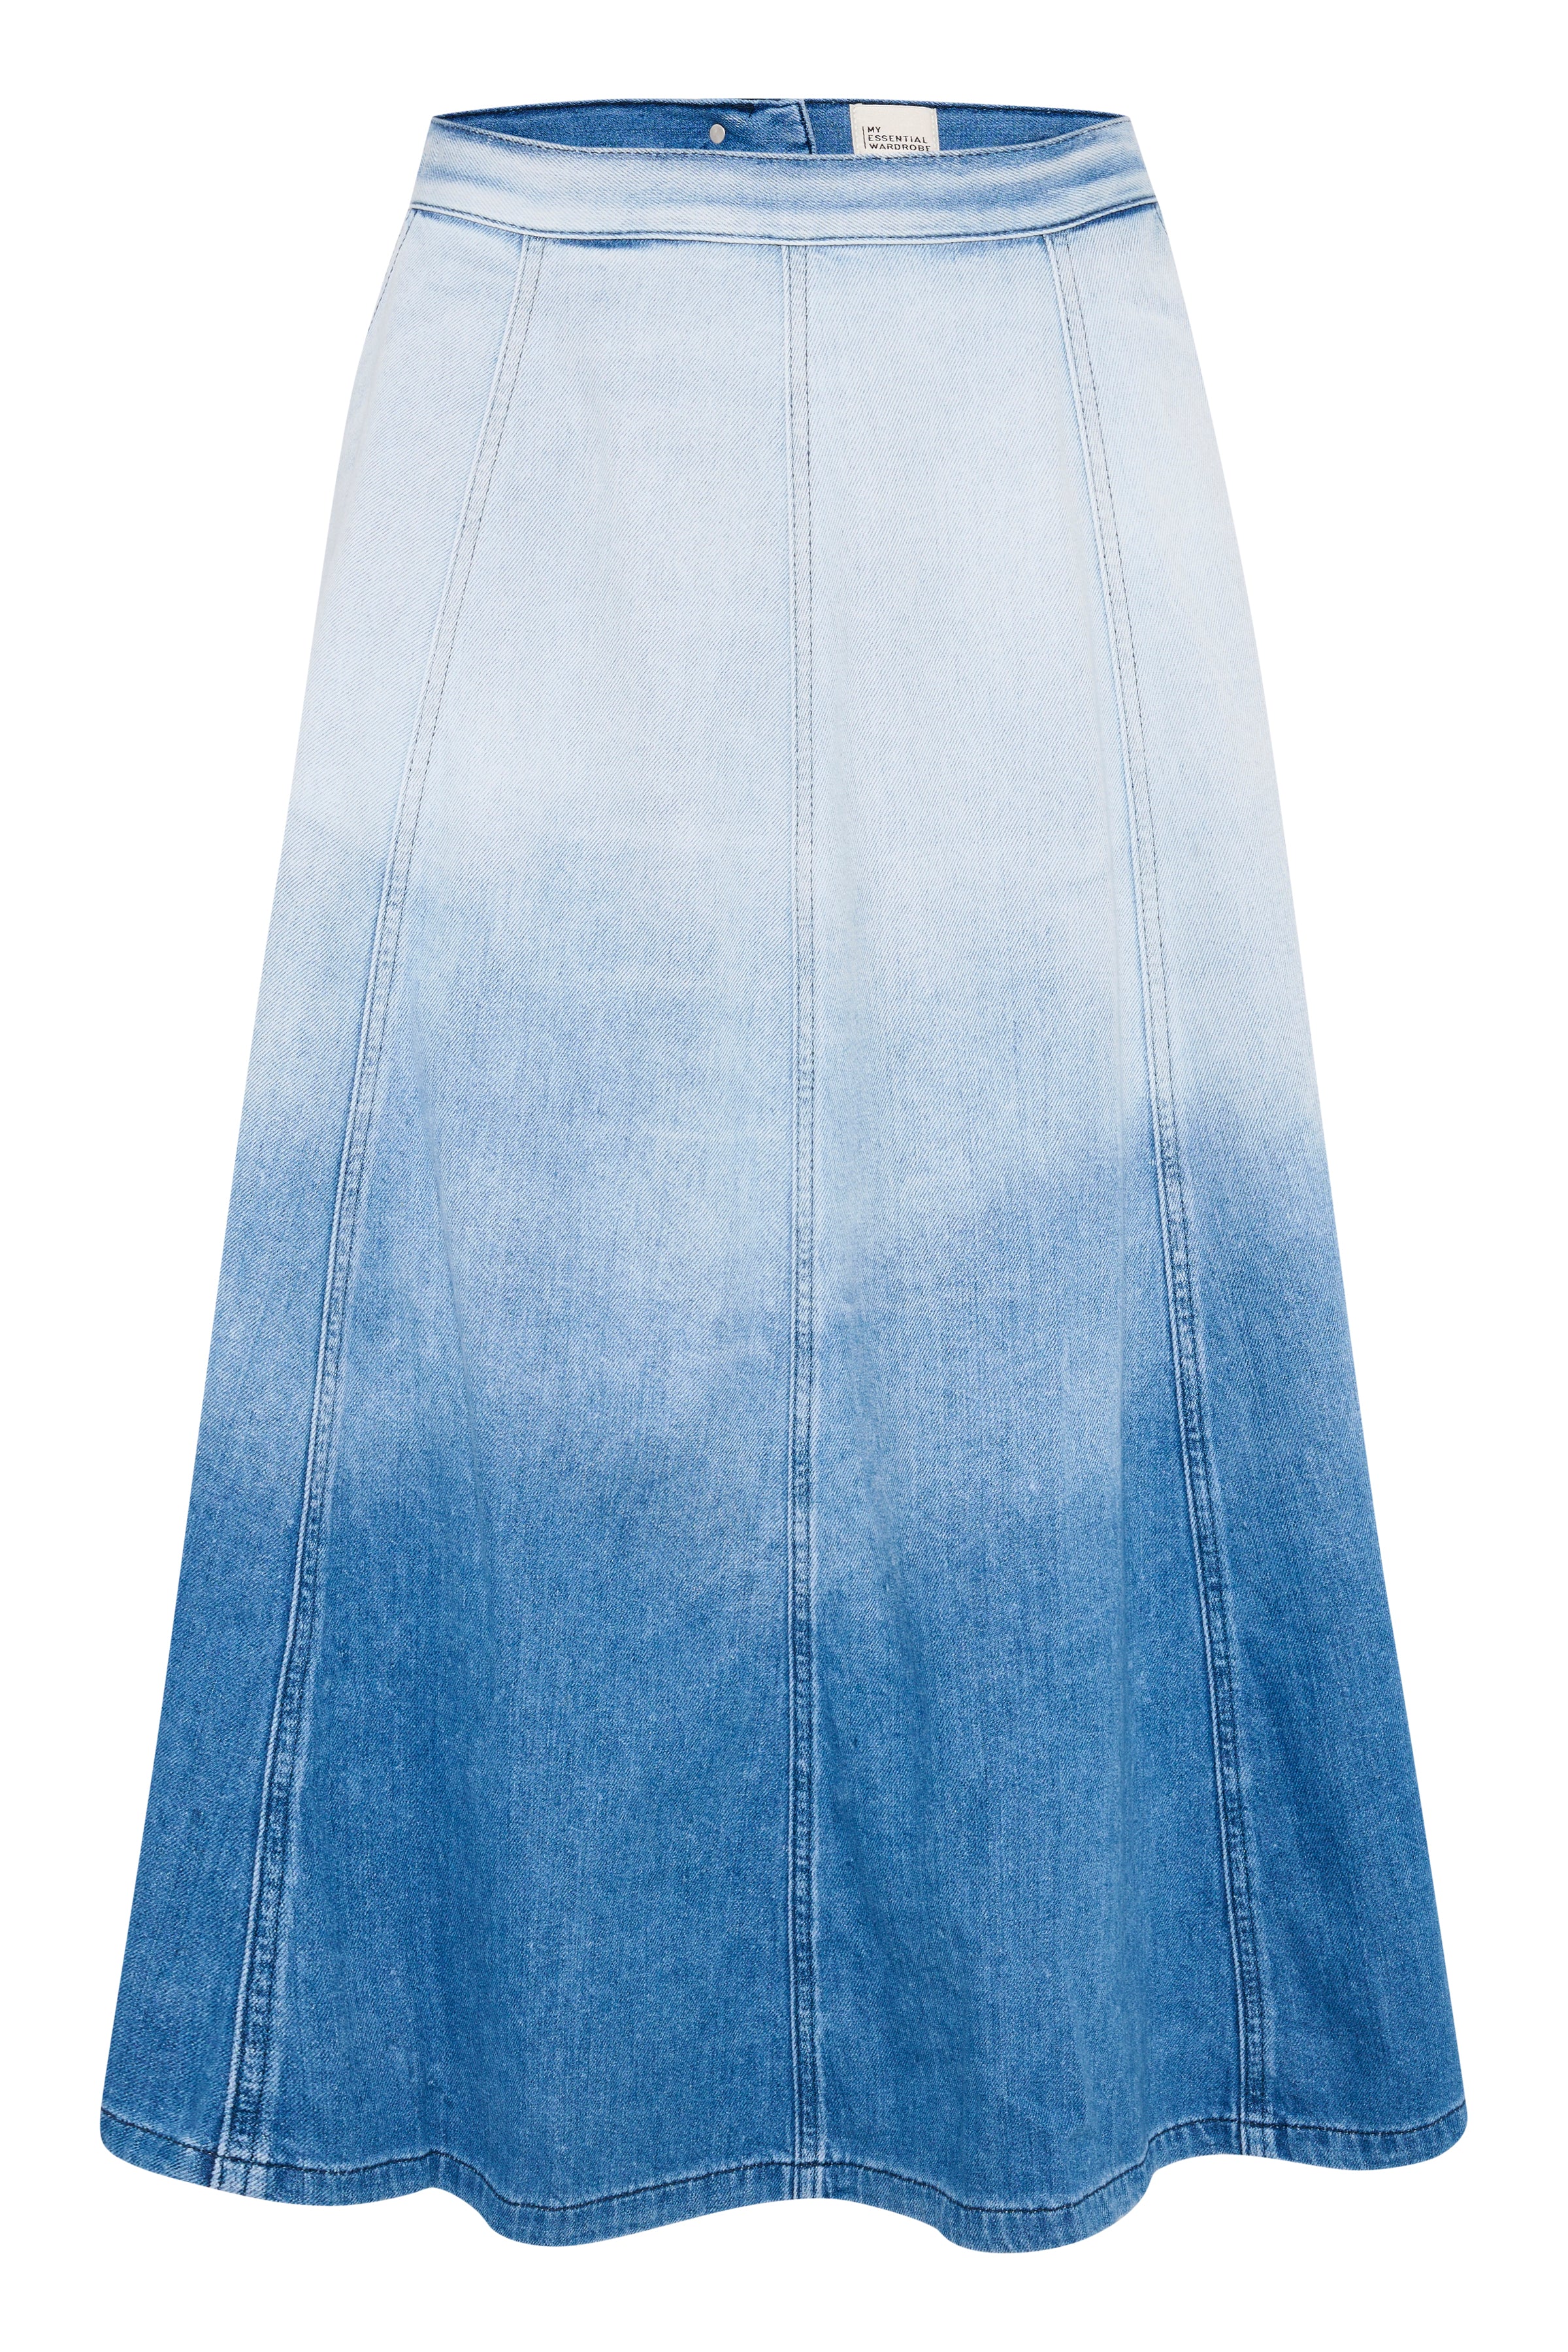 My Essential Wardrobe Malo Skirt, Dip Dye